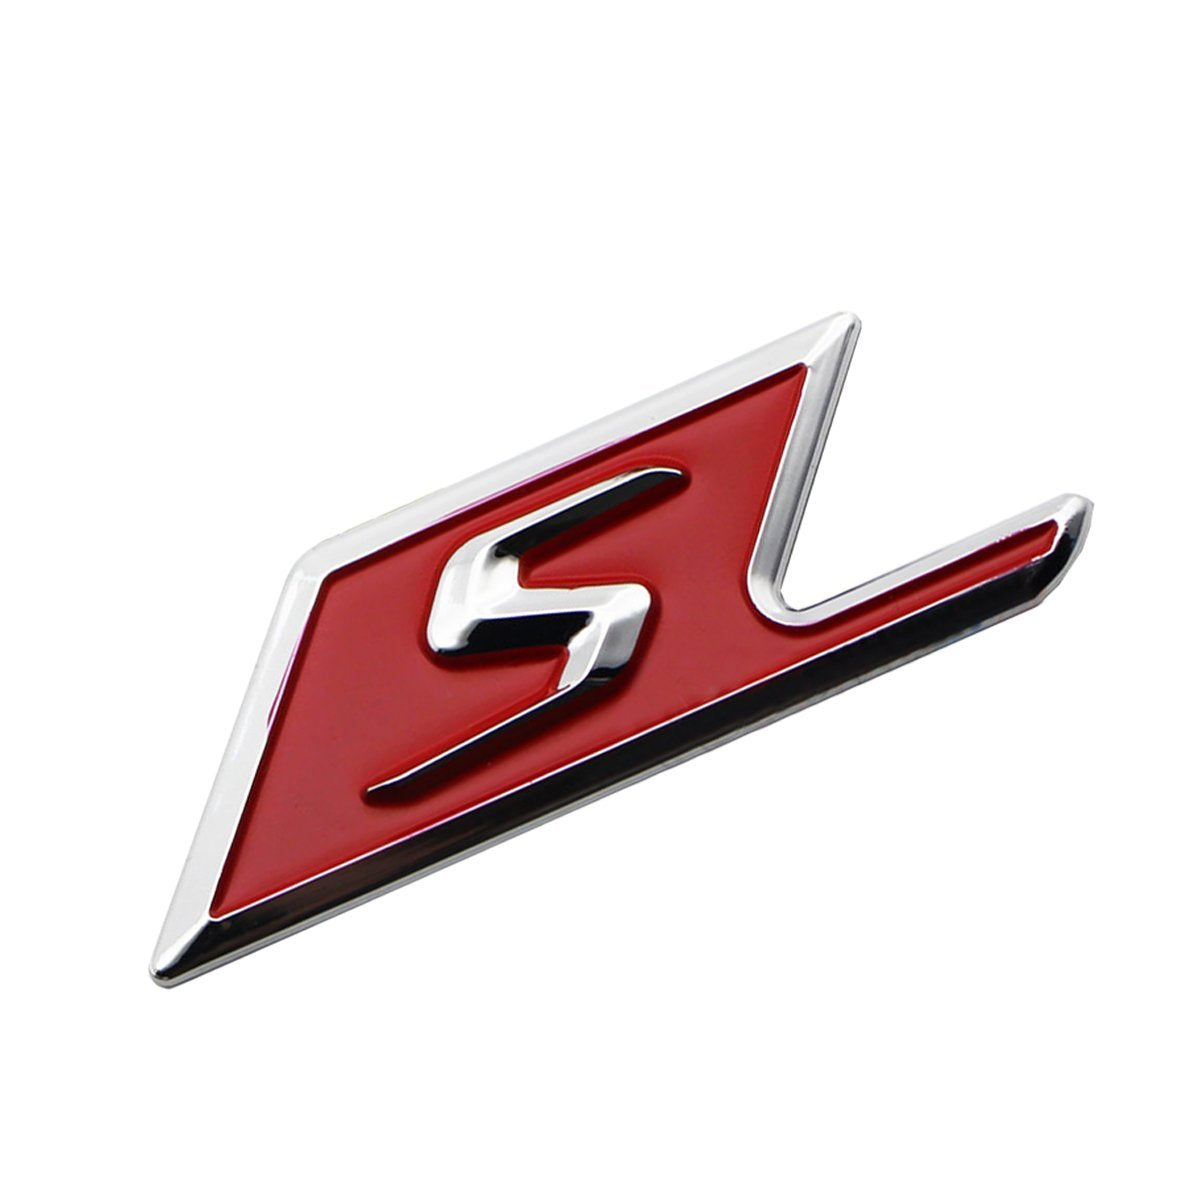 AMG Emblem Red Badge on Trank Lid